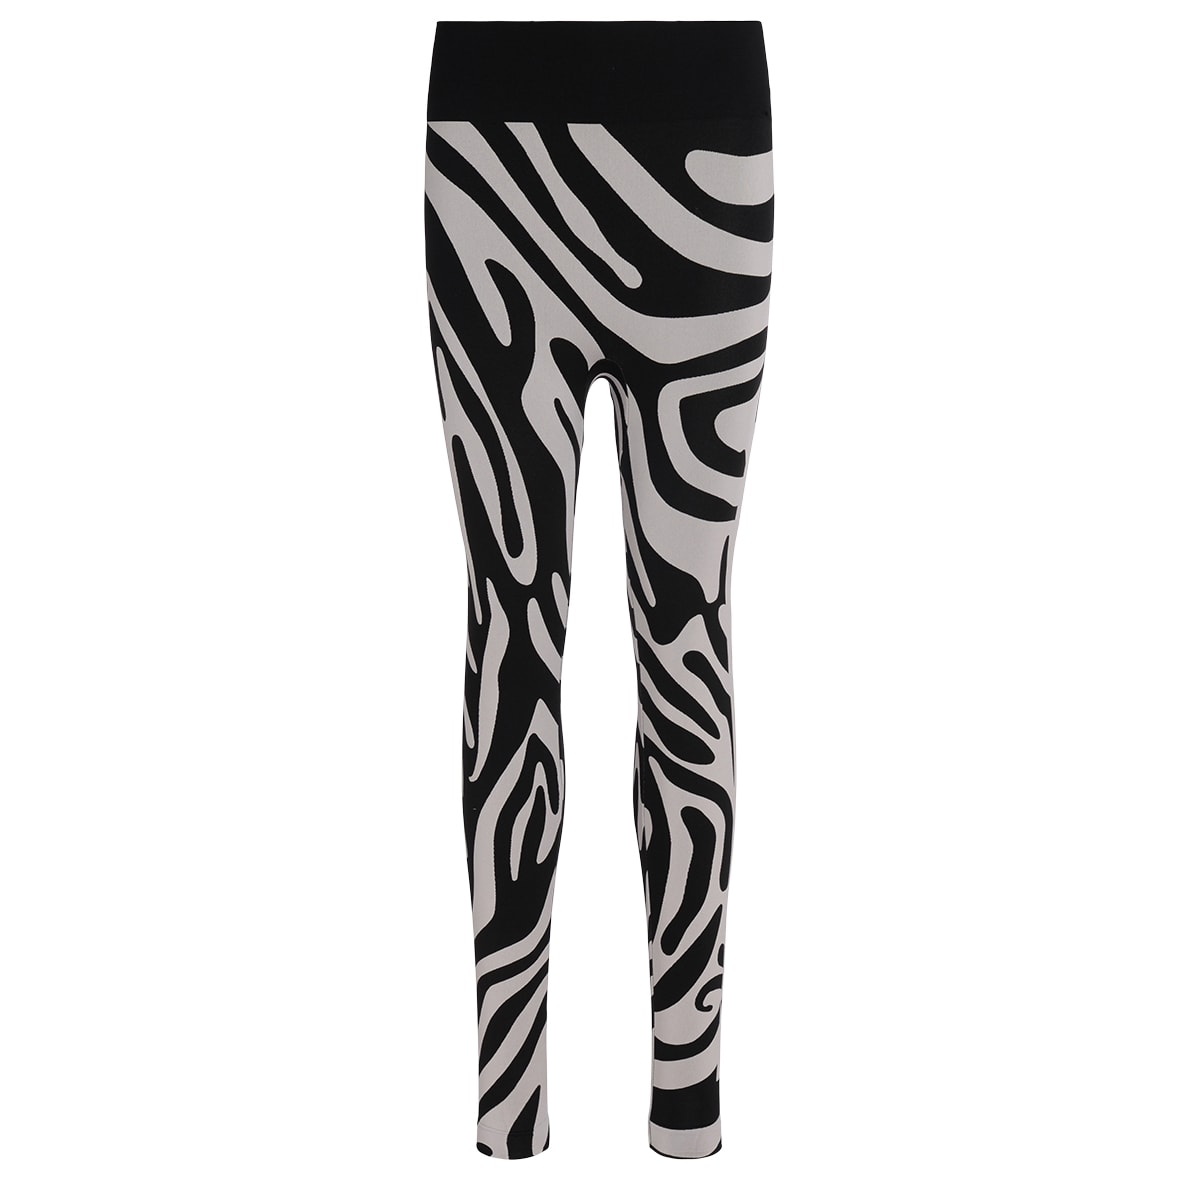 Leggings Adidas By Stella Mccartney With Black And Grey Zebra Print